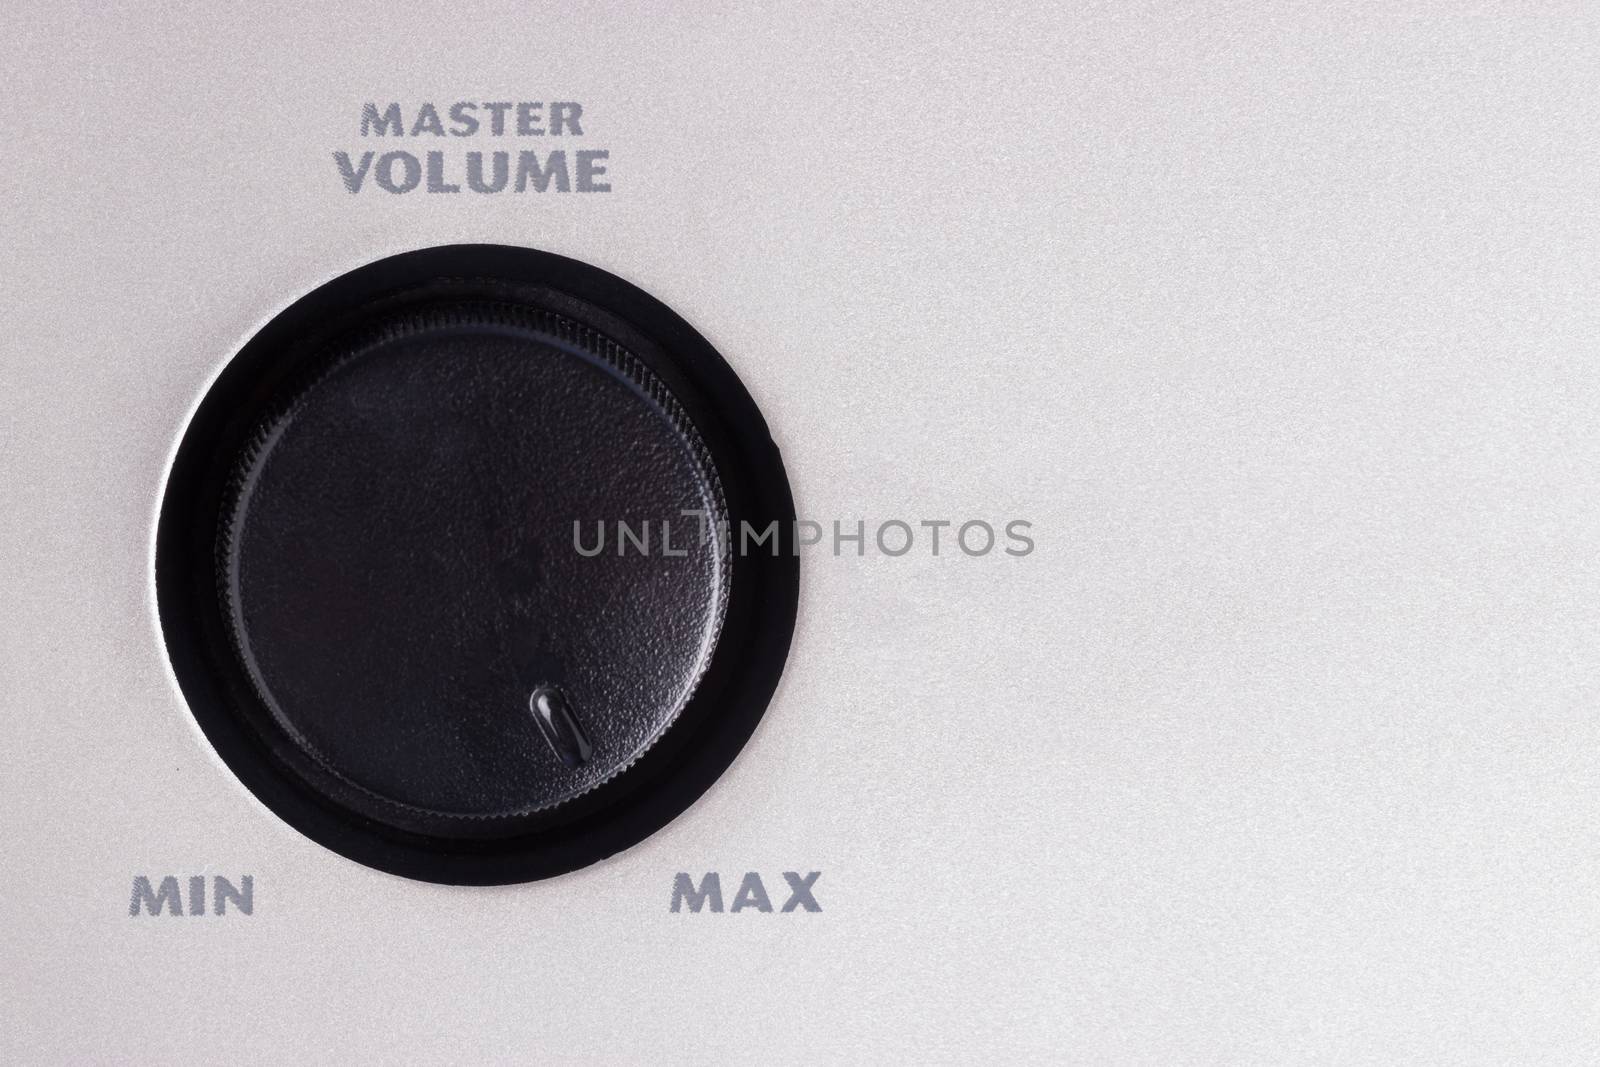 volume switcher turn on maximum. Max volume concept